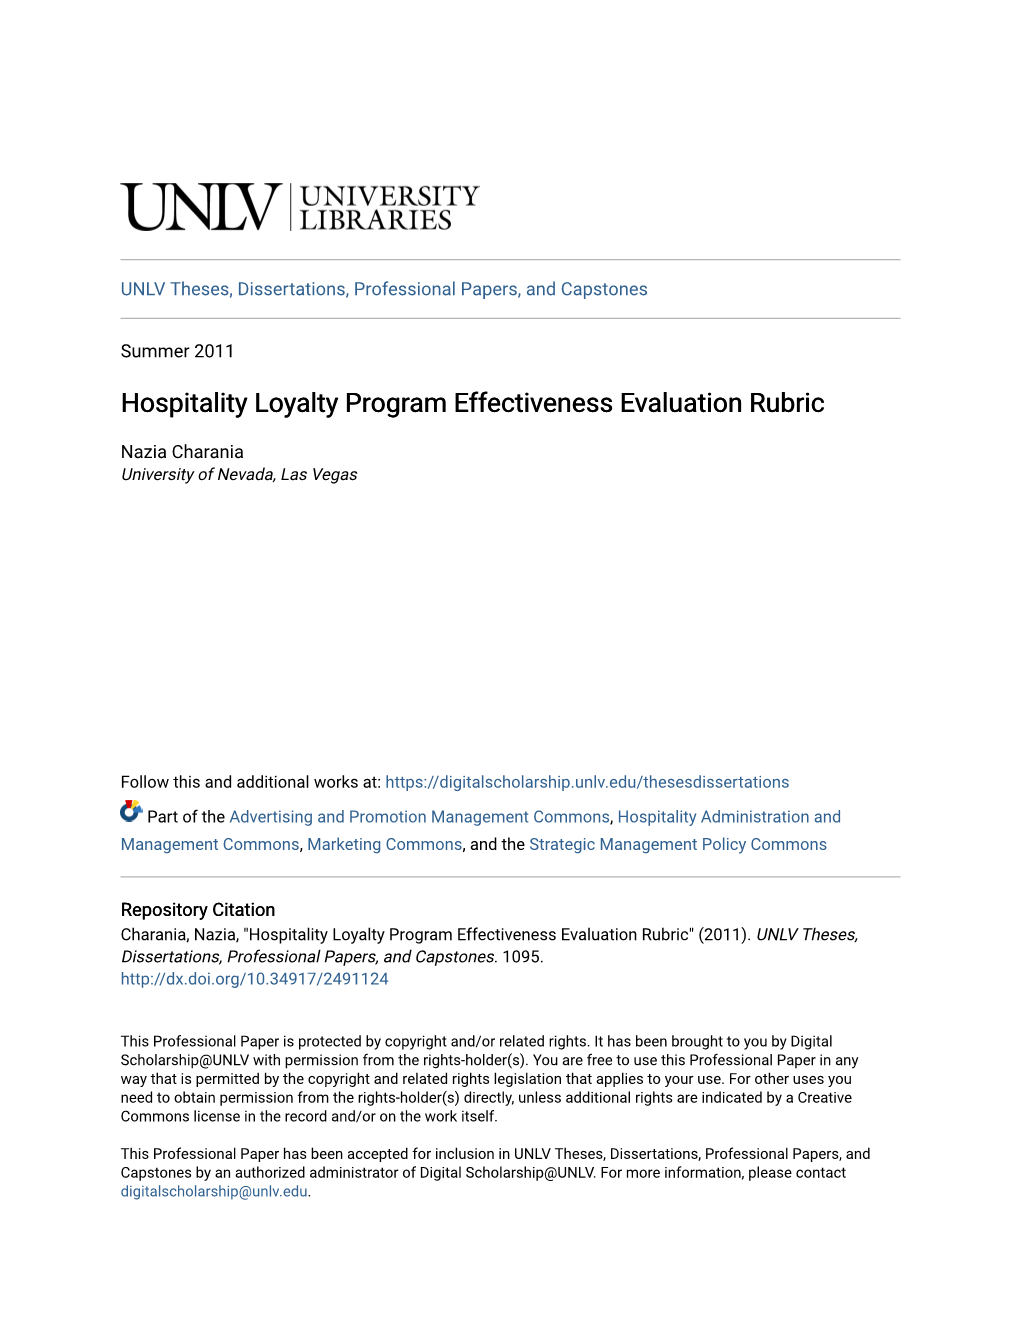 Hospitality Loyalty Program Effectiveness Evaluation Rubric